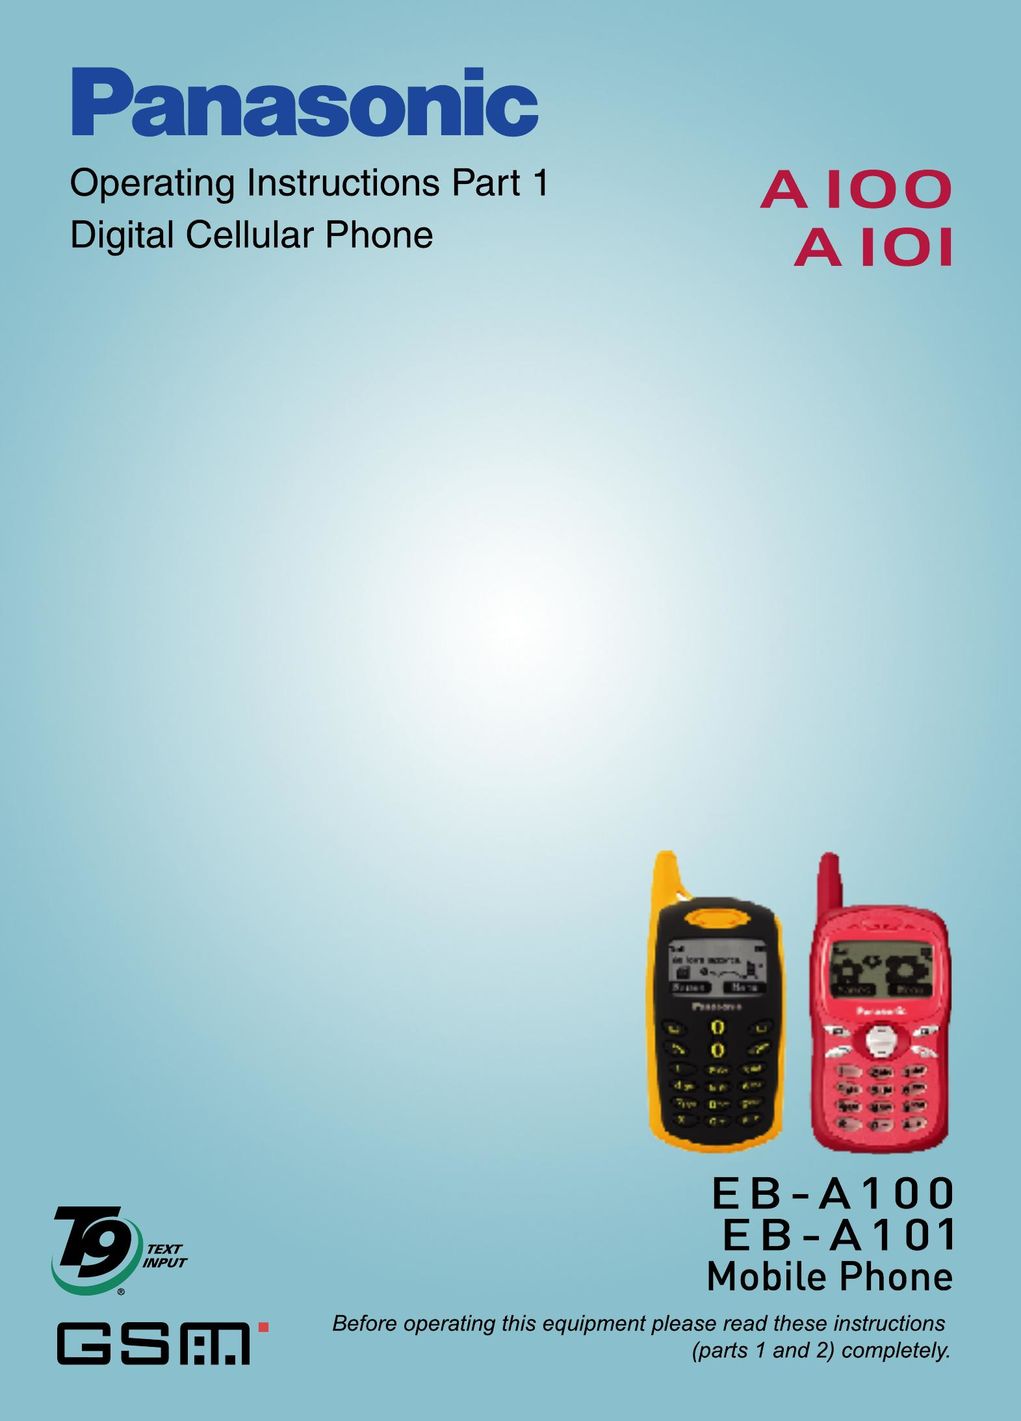 Panasonic A100 Cell Phone User Manual